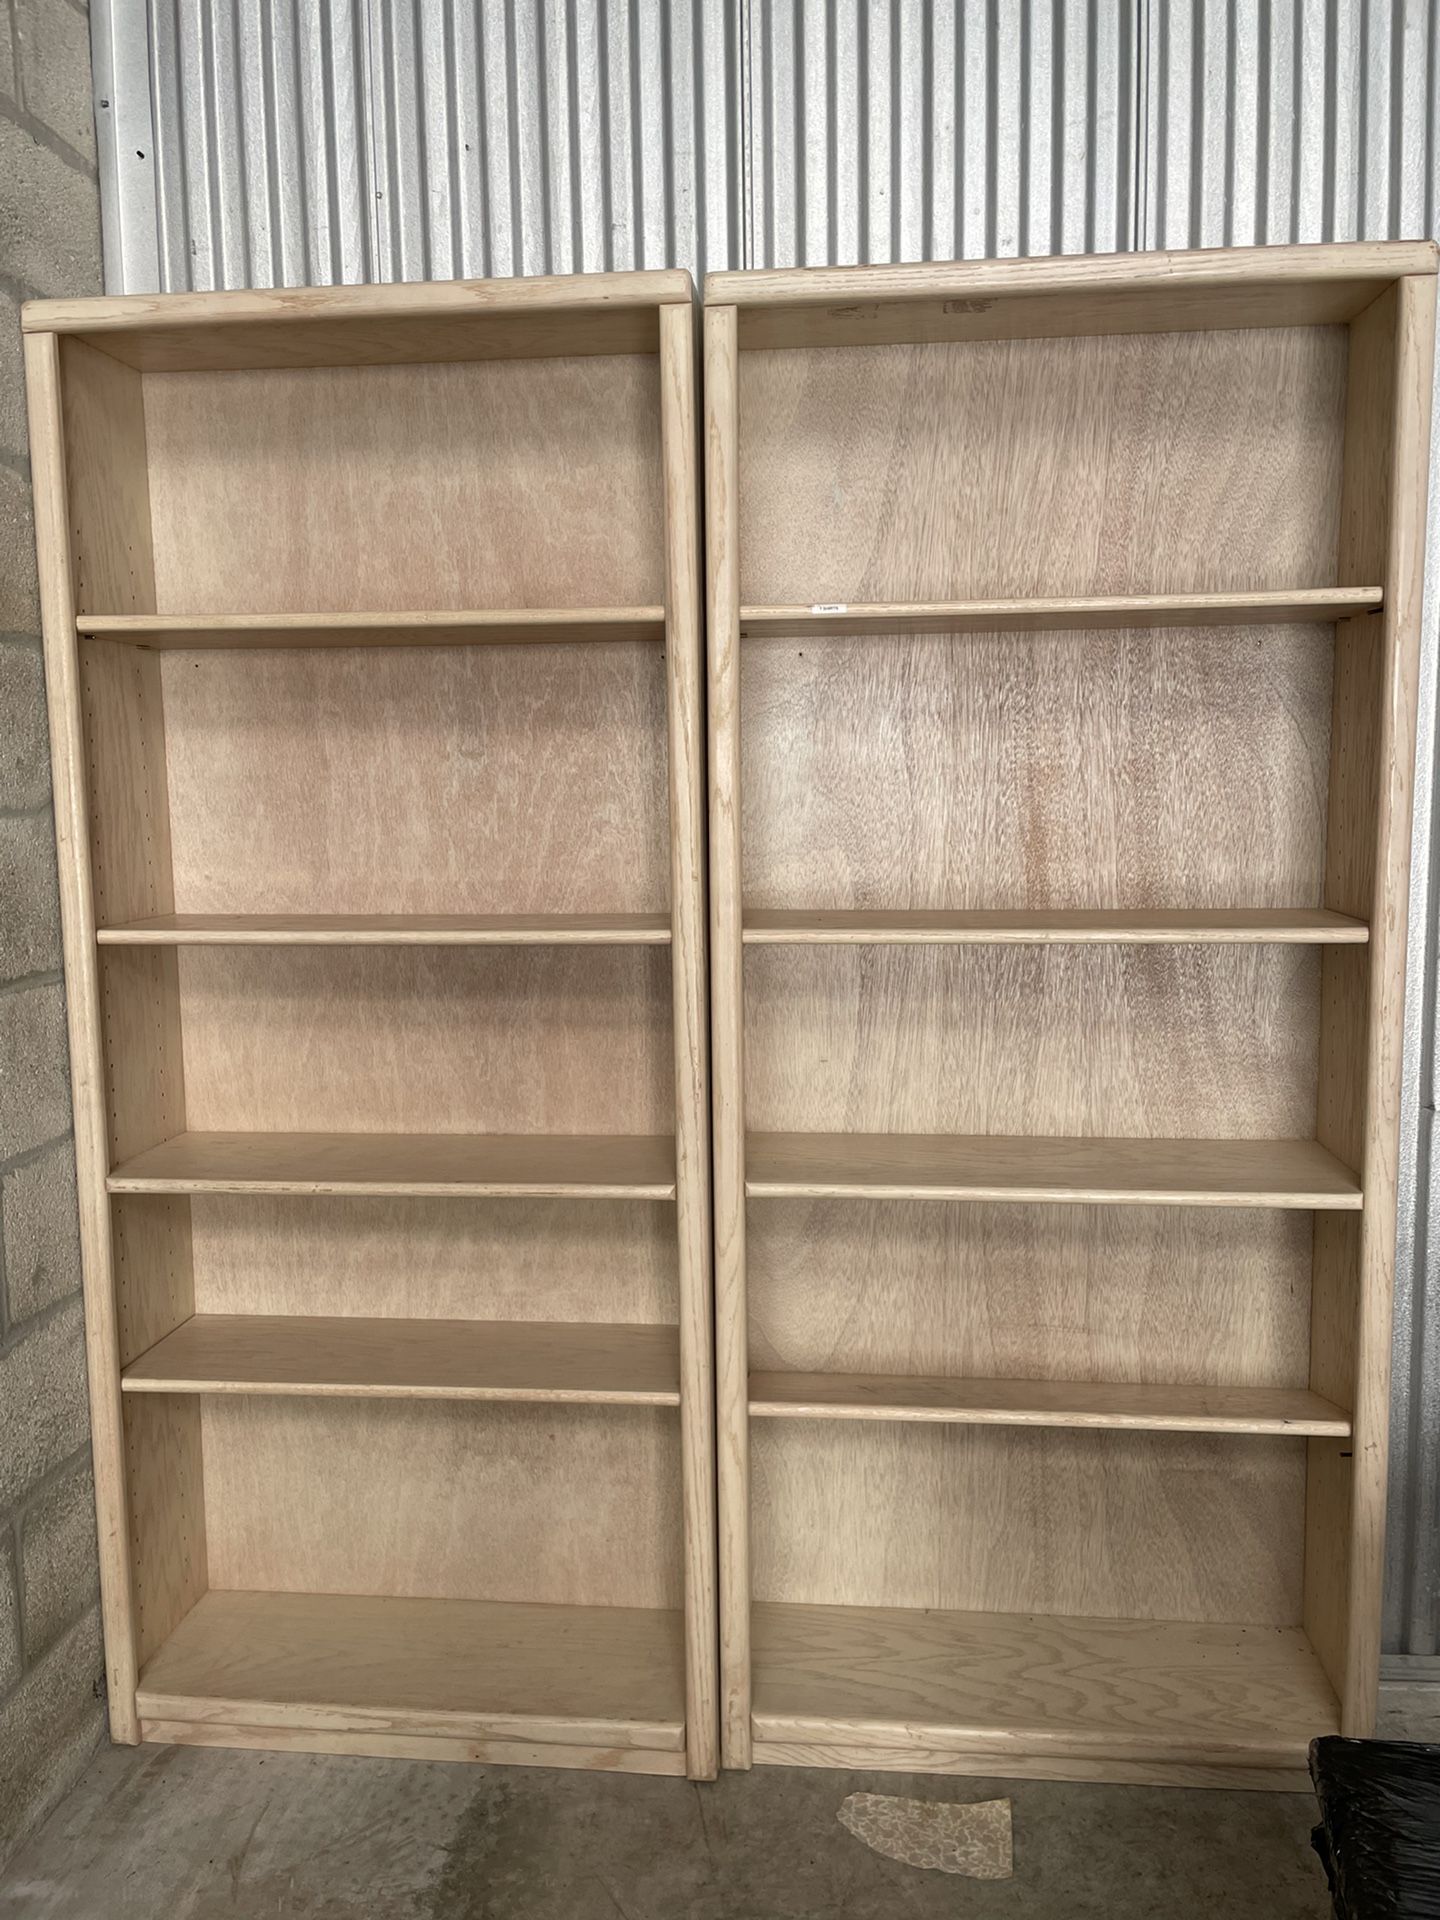 Bookshelves . Solid Wood Adjustable.$40/each